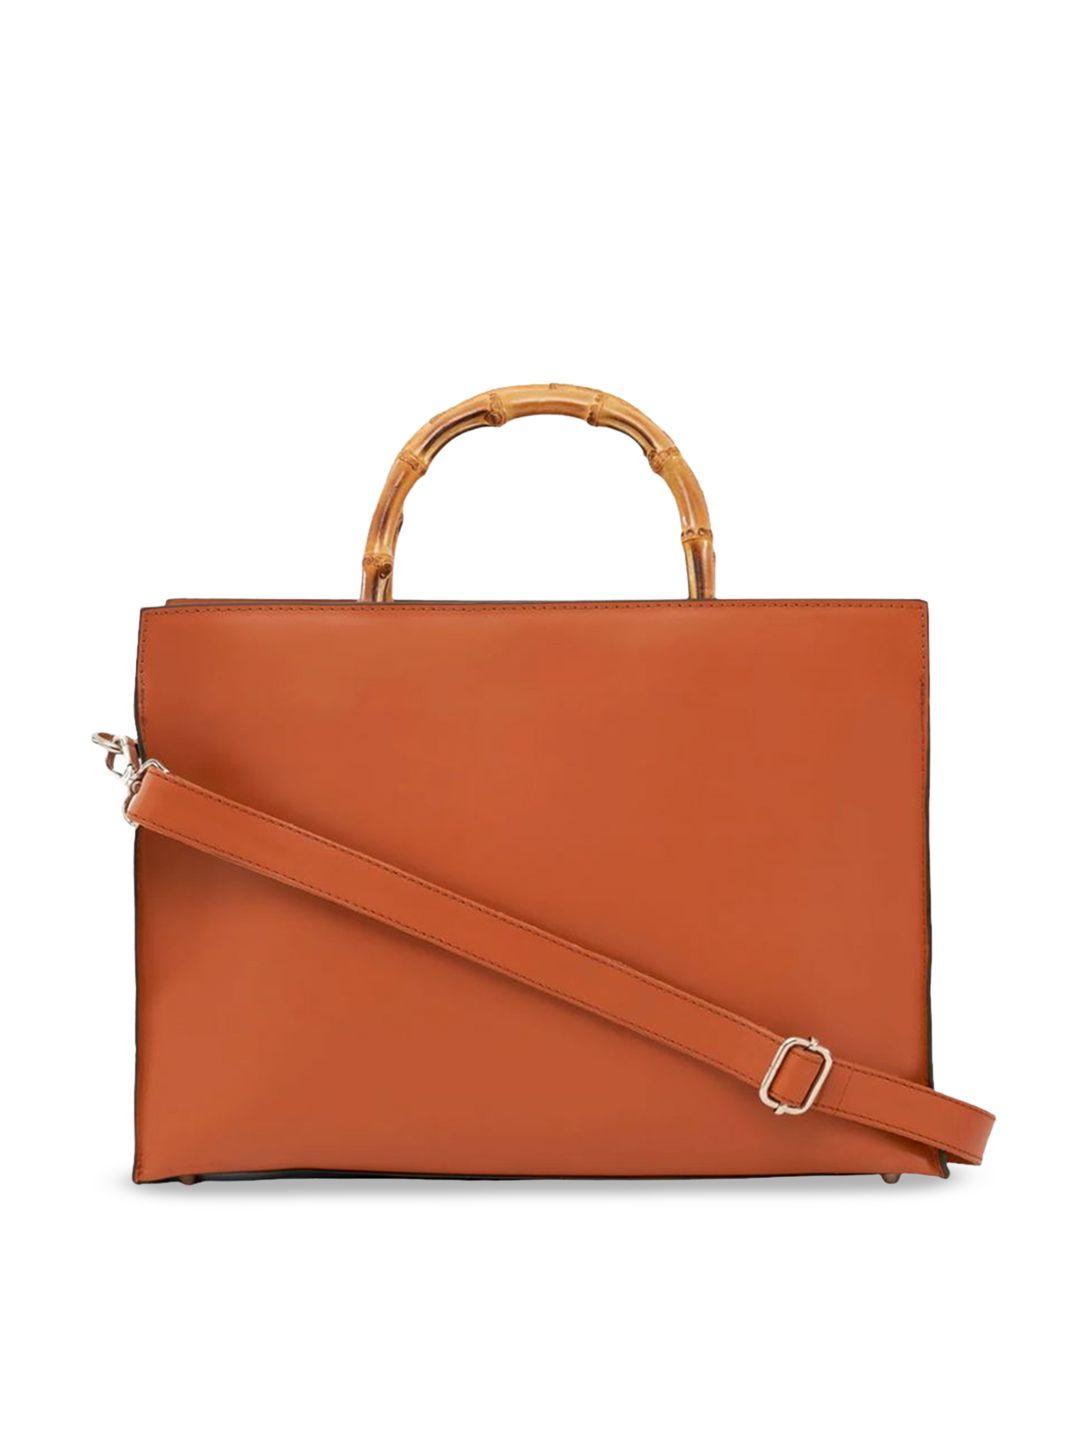 mistry leather oversized structured handheld bag